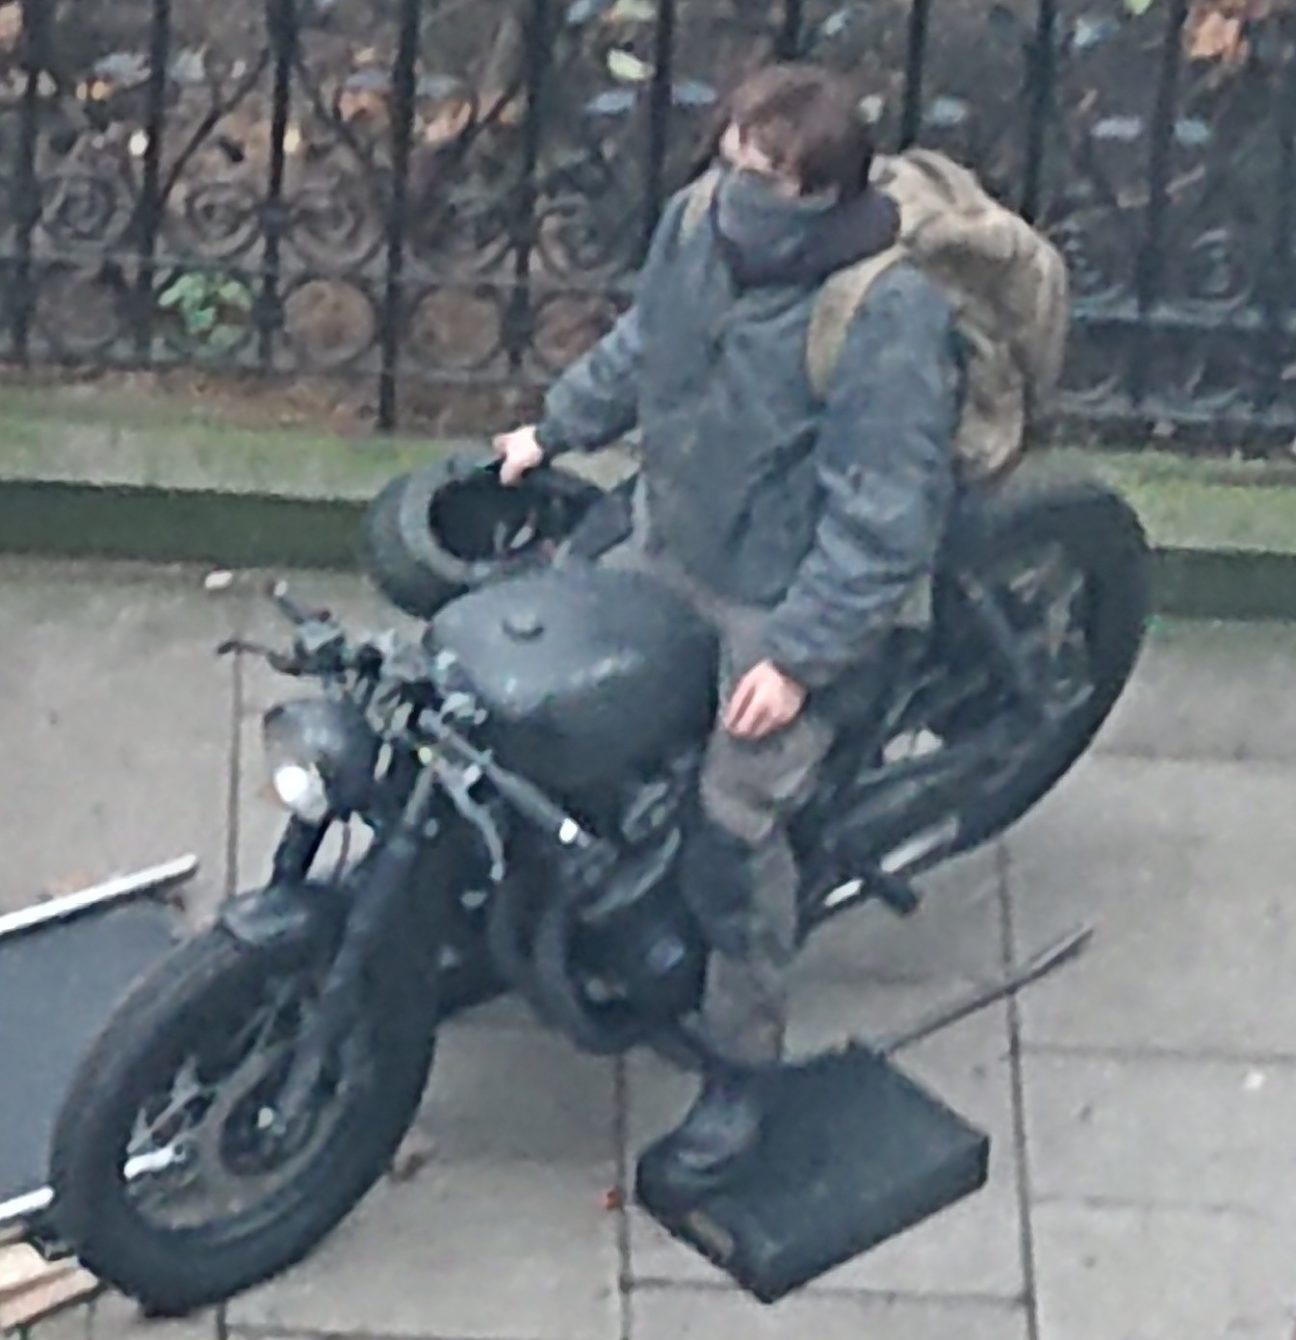 The New Robert Pattinson Batman Movie Has Motorcycles - webBikeWorld